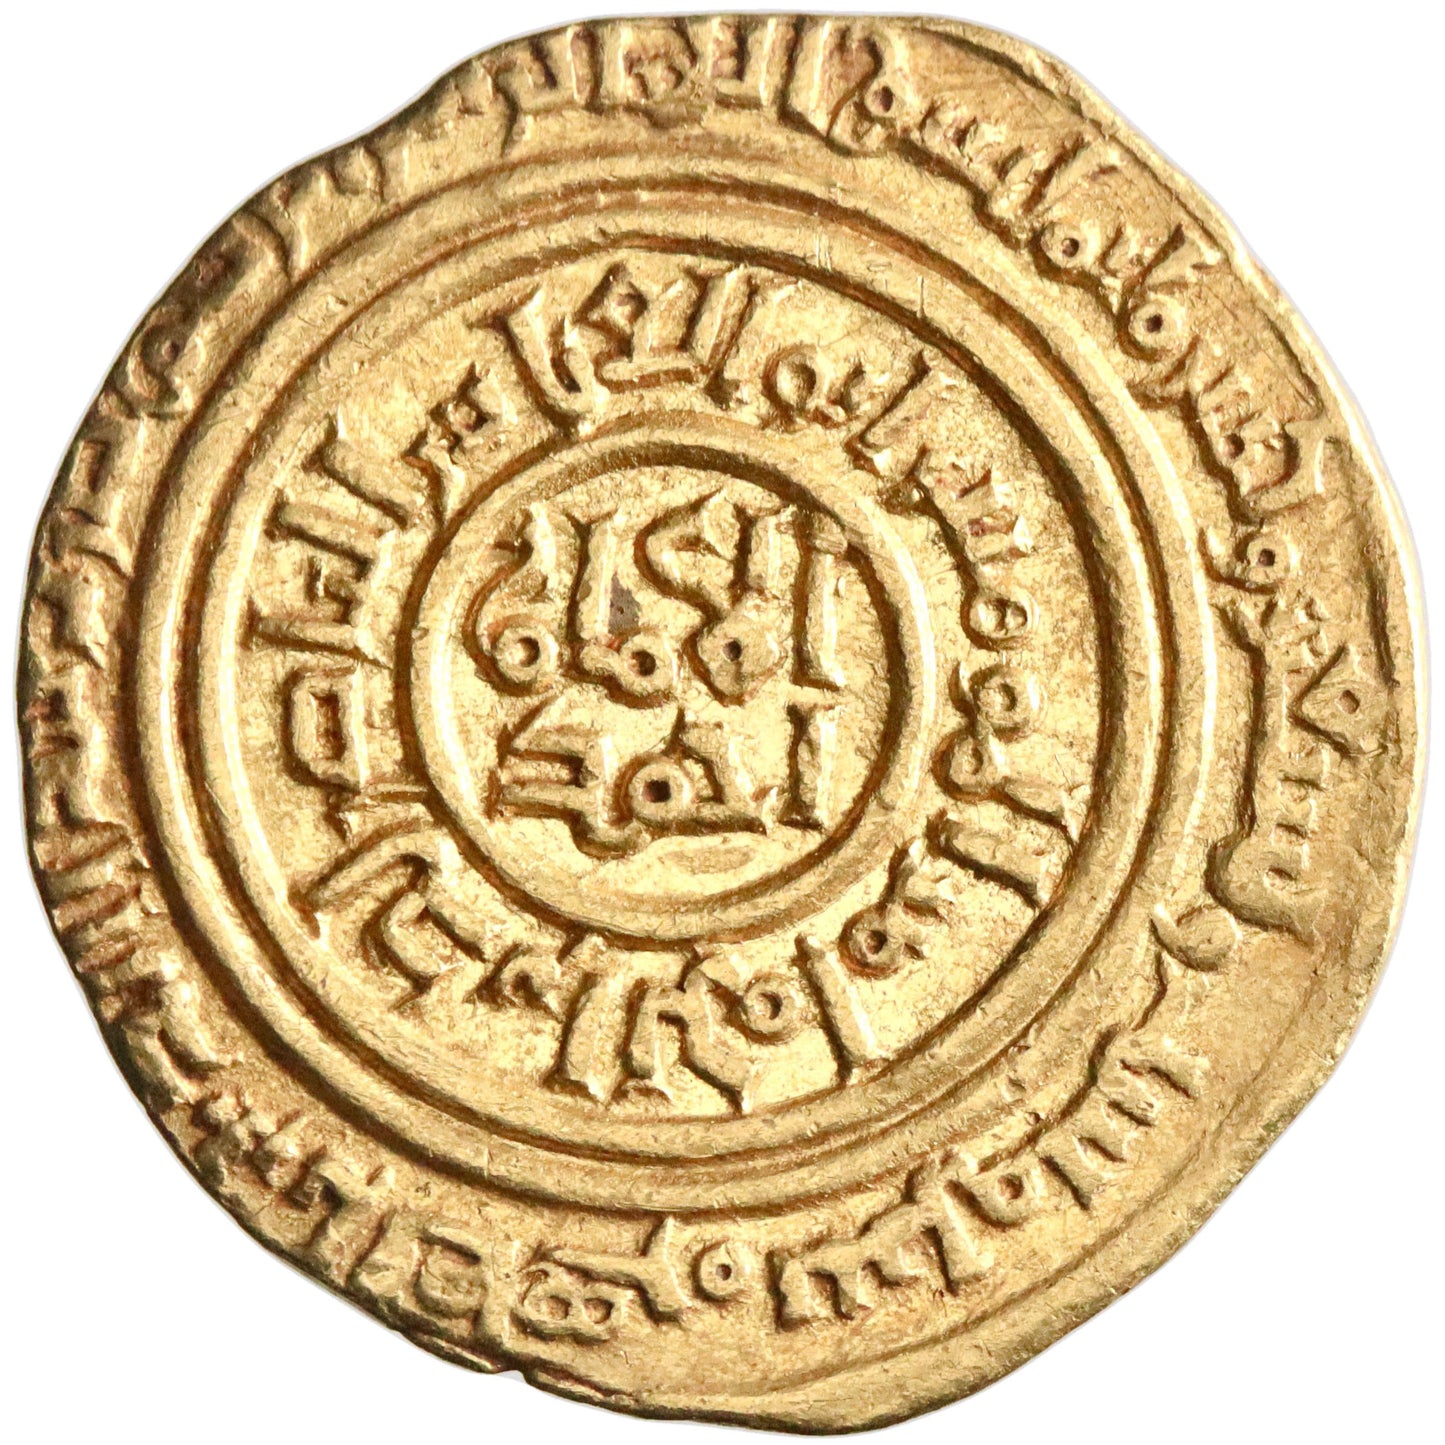 Ayyubid, al-Mansur Muhammad, gold dinar, al-Qahira mint, AH 596, citing al-Nasir